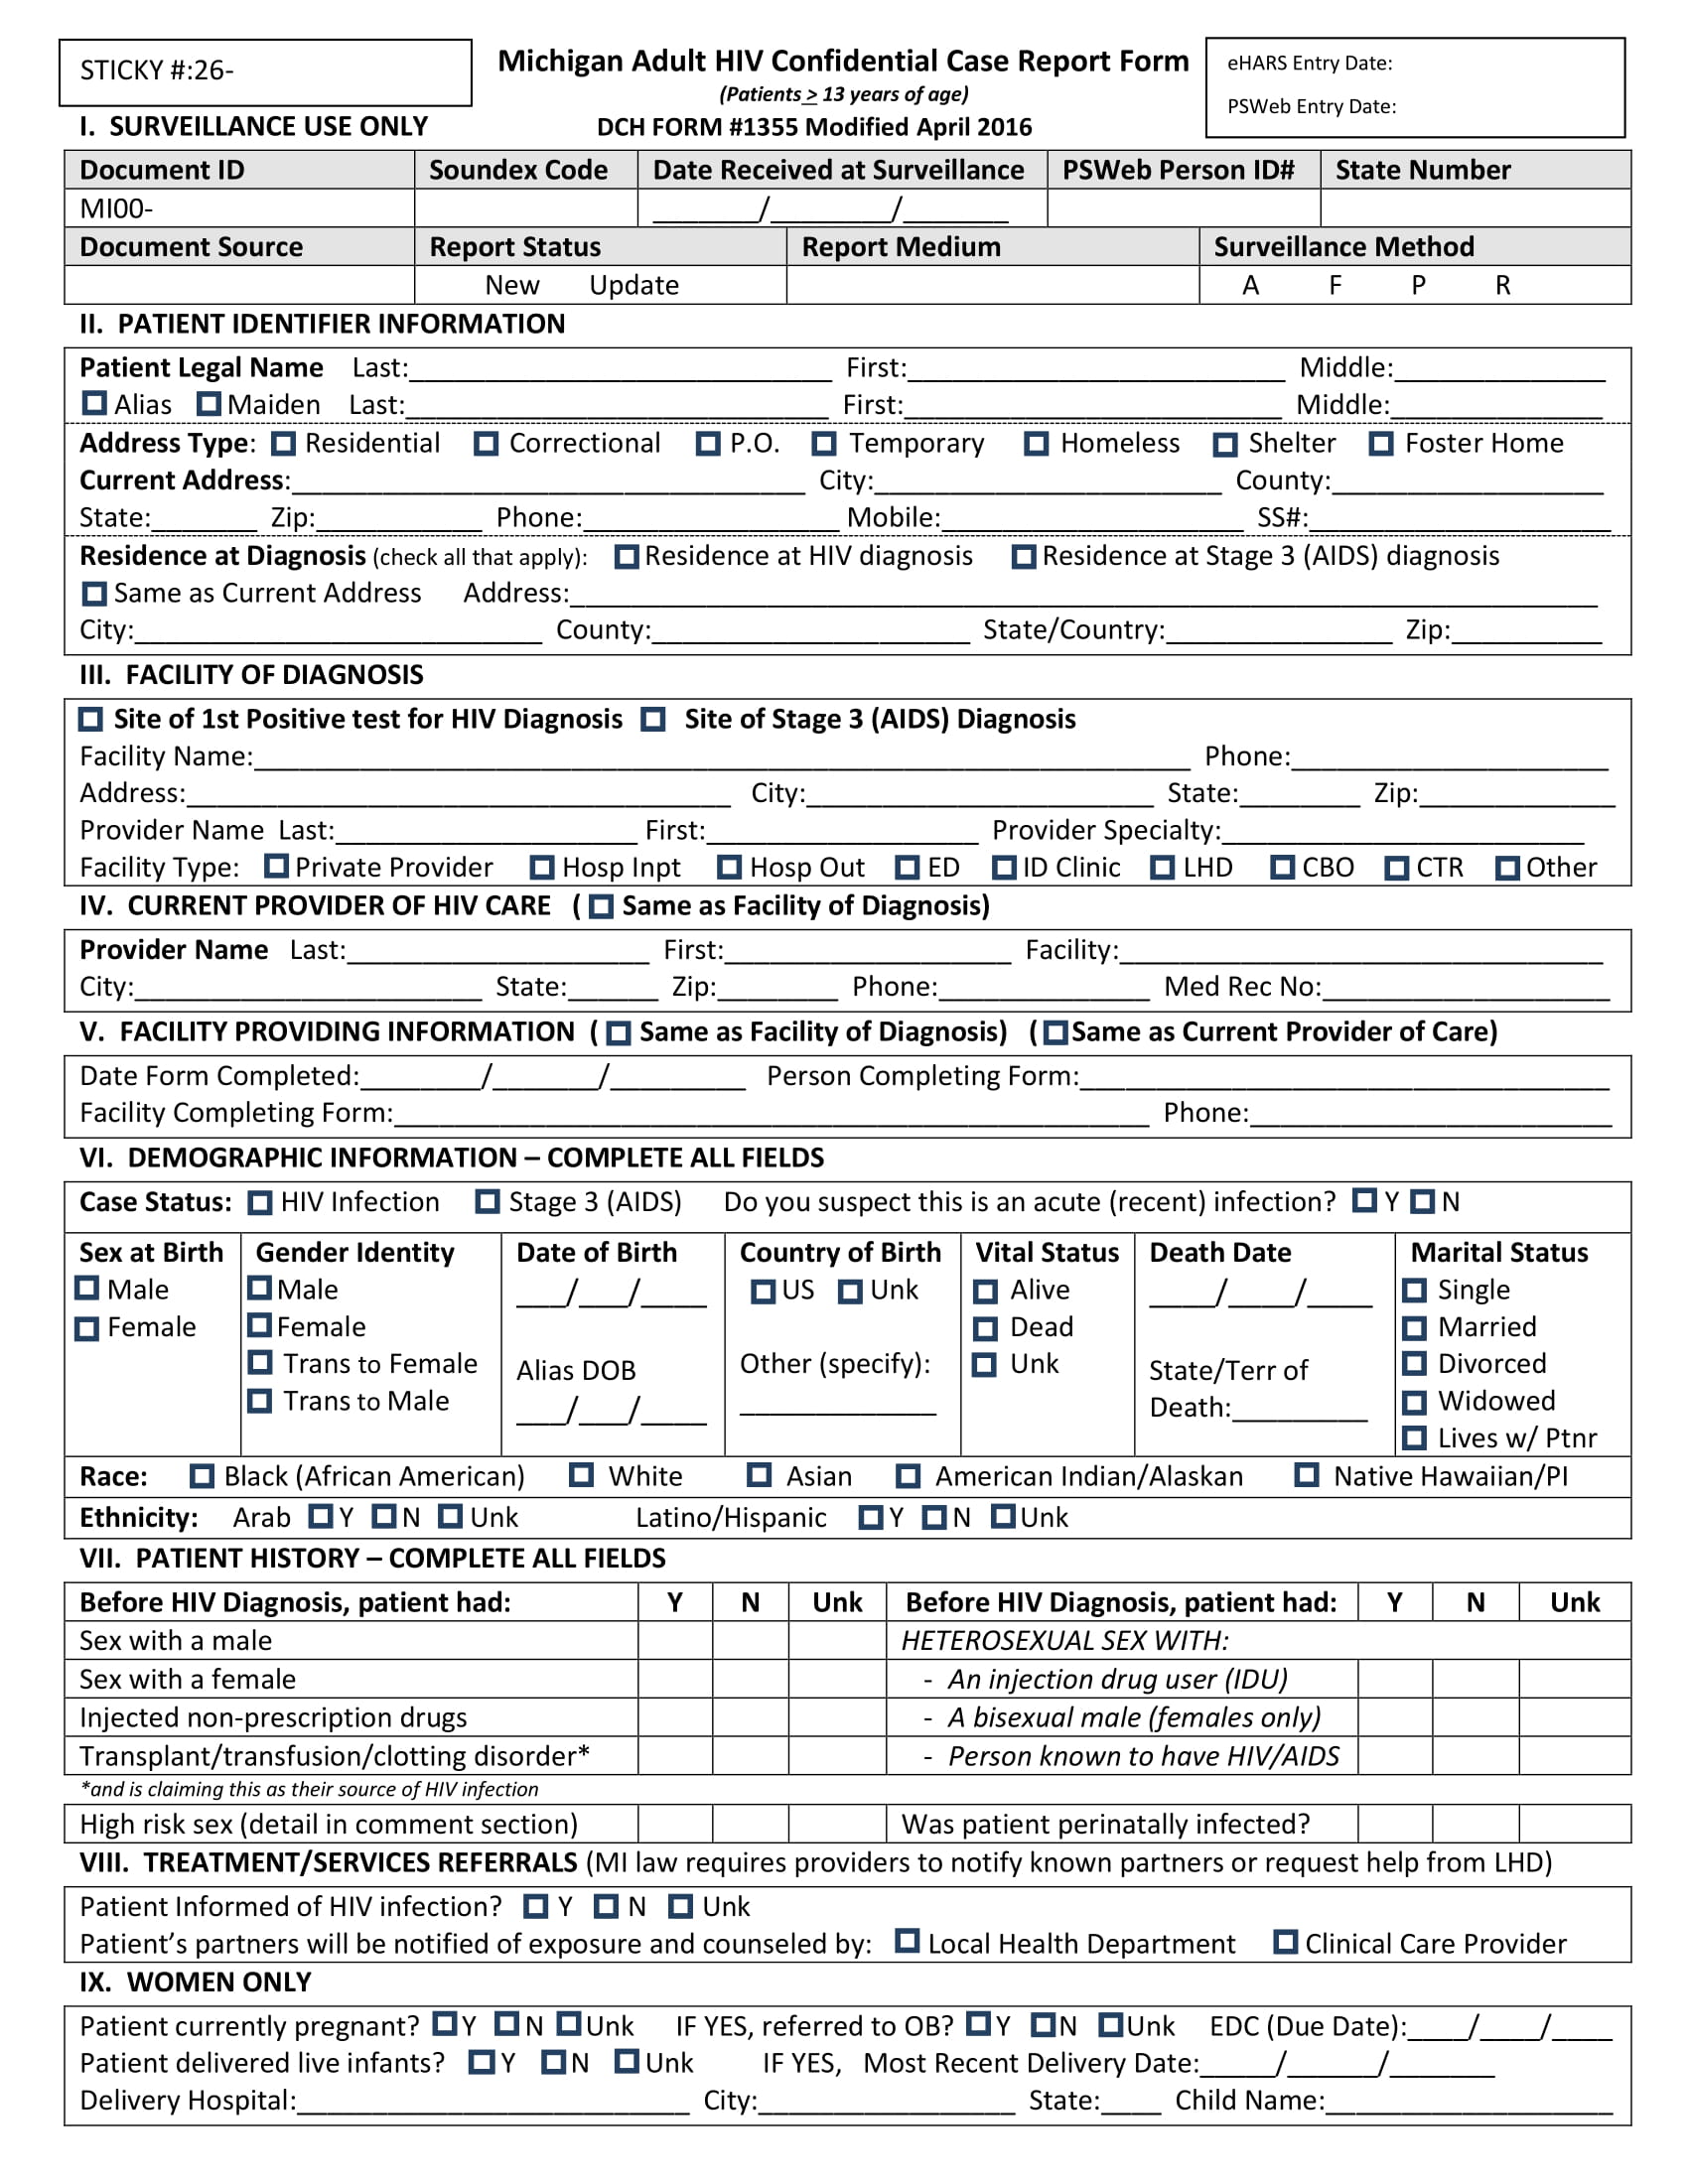 sample confidential case report form 1